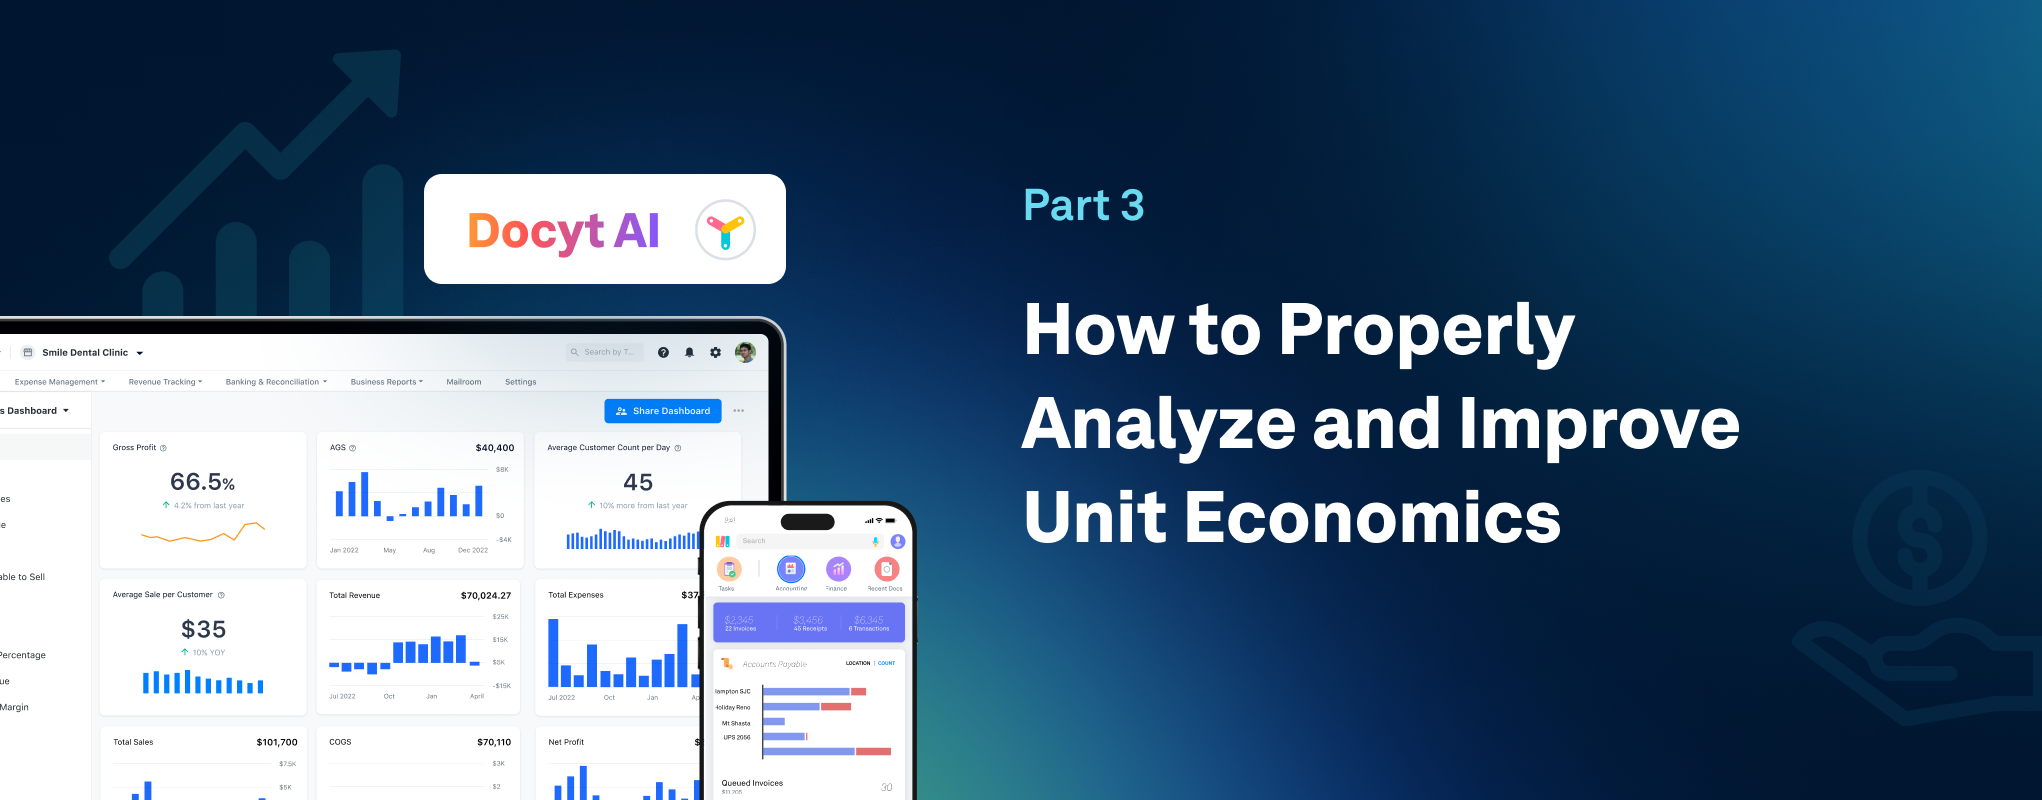 How to Properly Analyze and Improve Unit Economics, Part 3